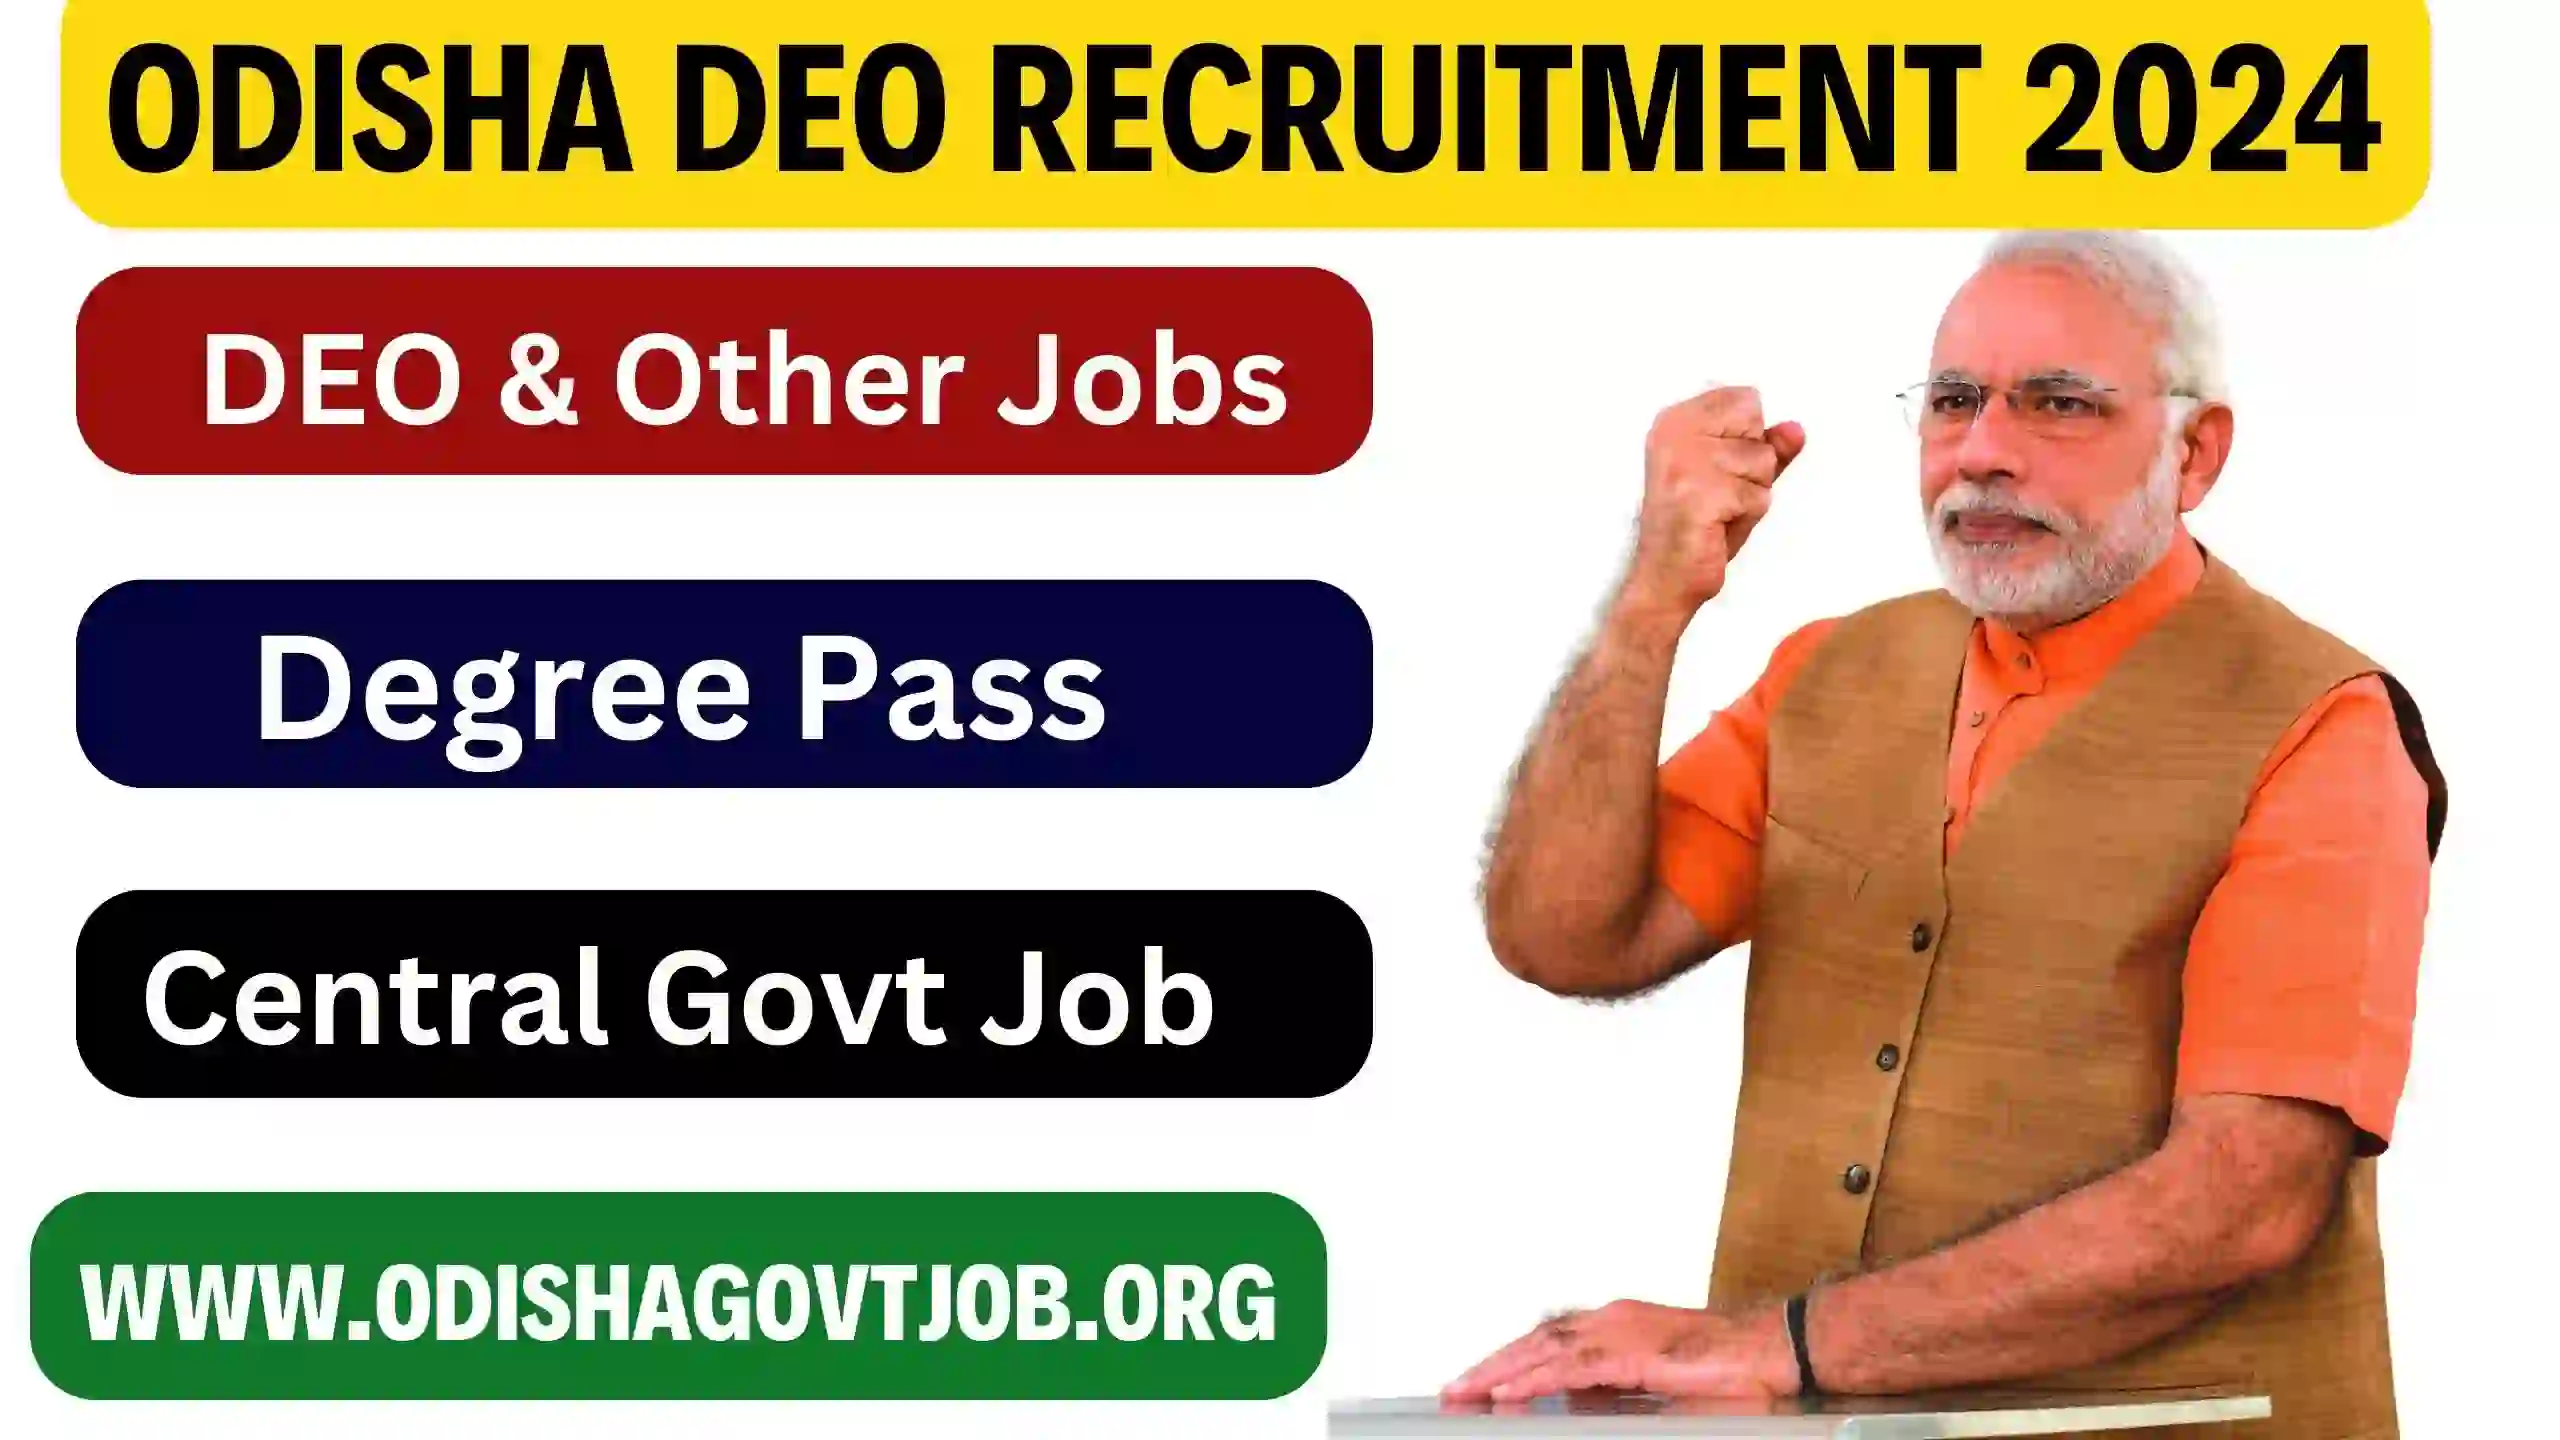 Odisha DEO Recruitment 2024